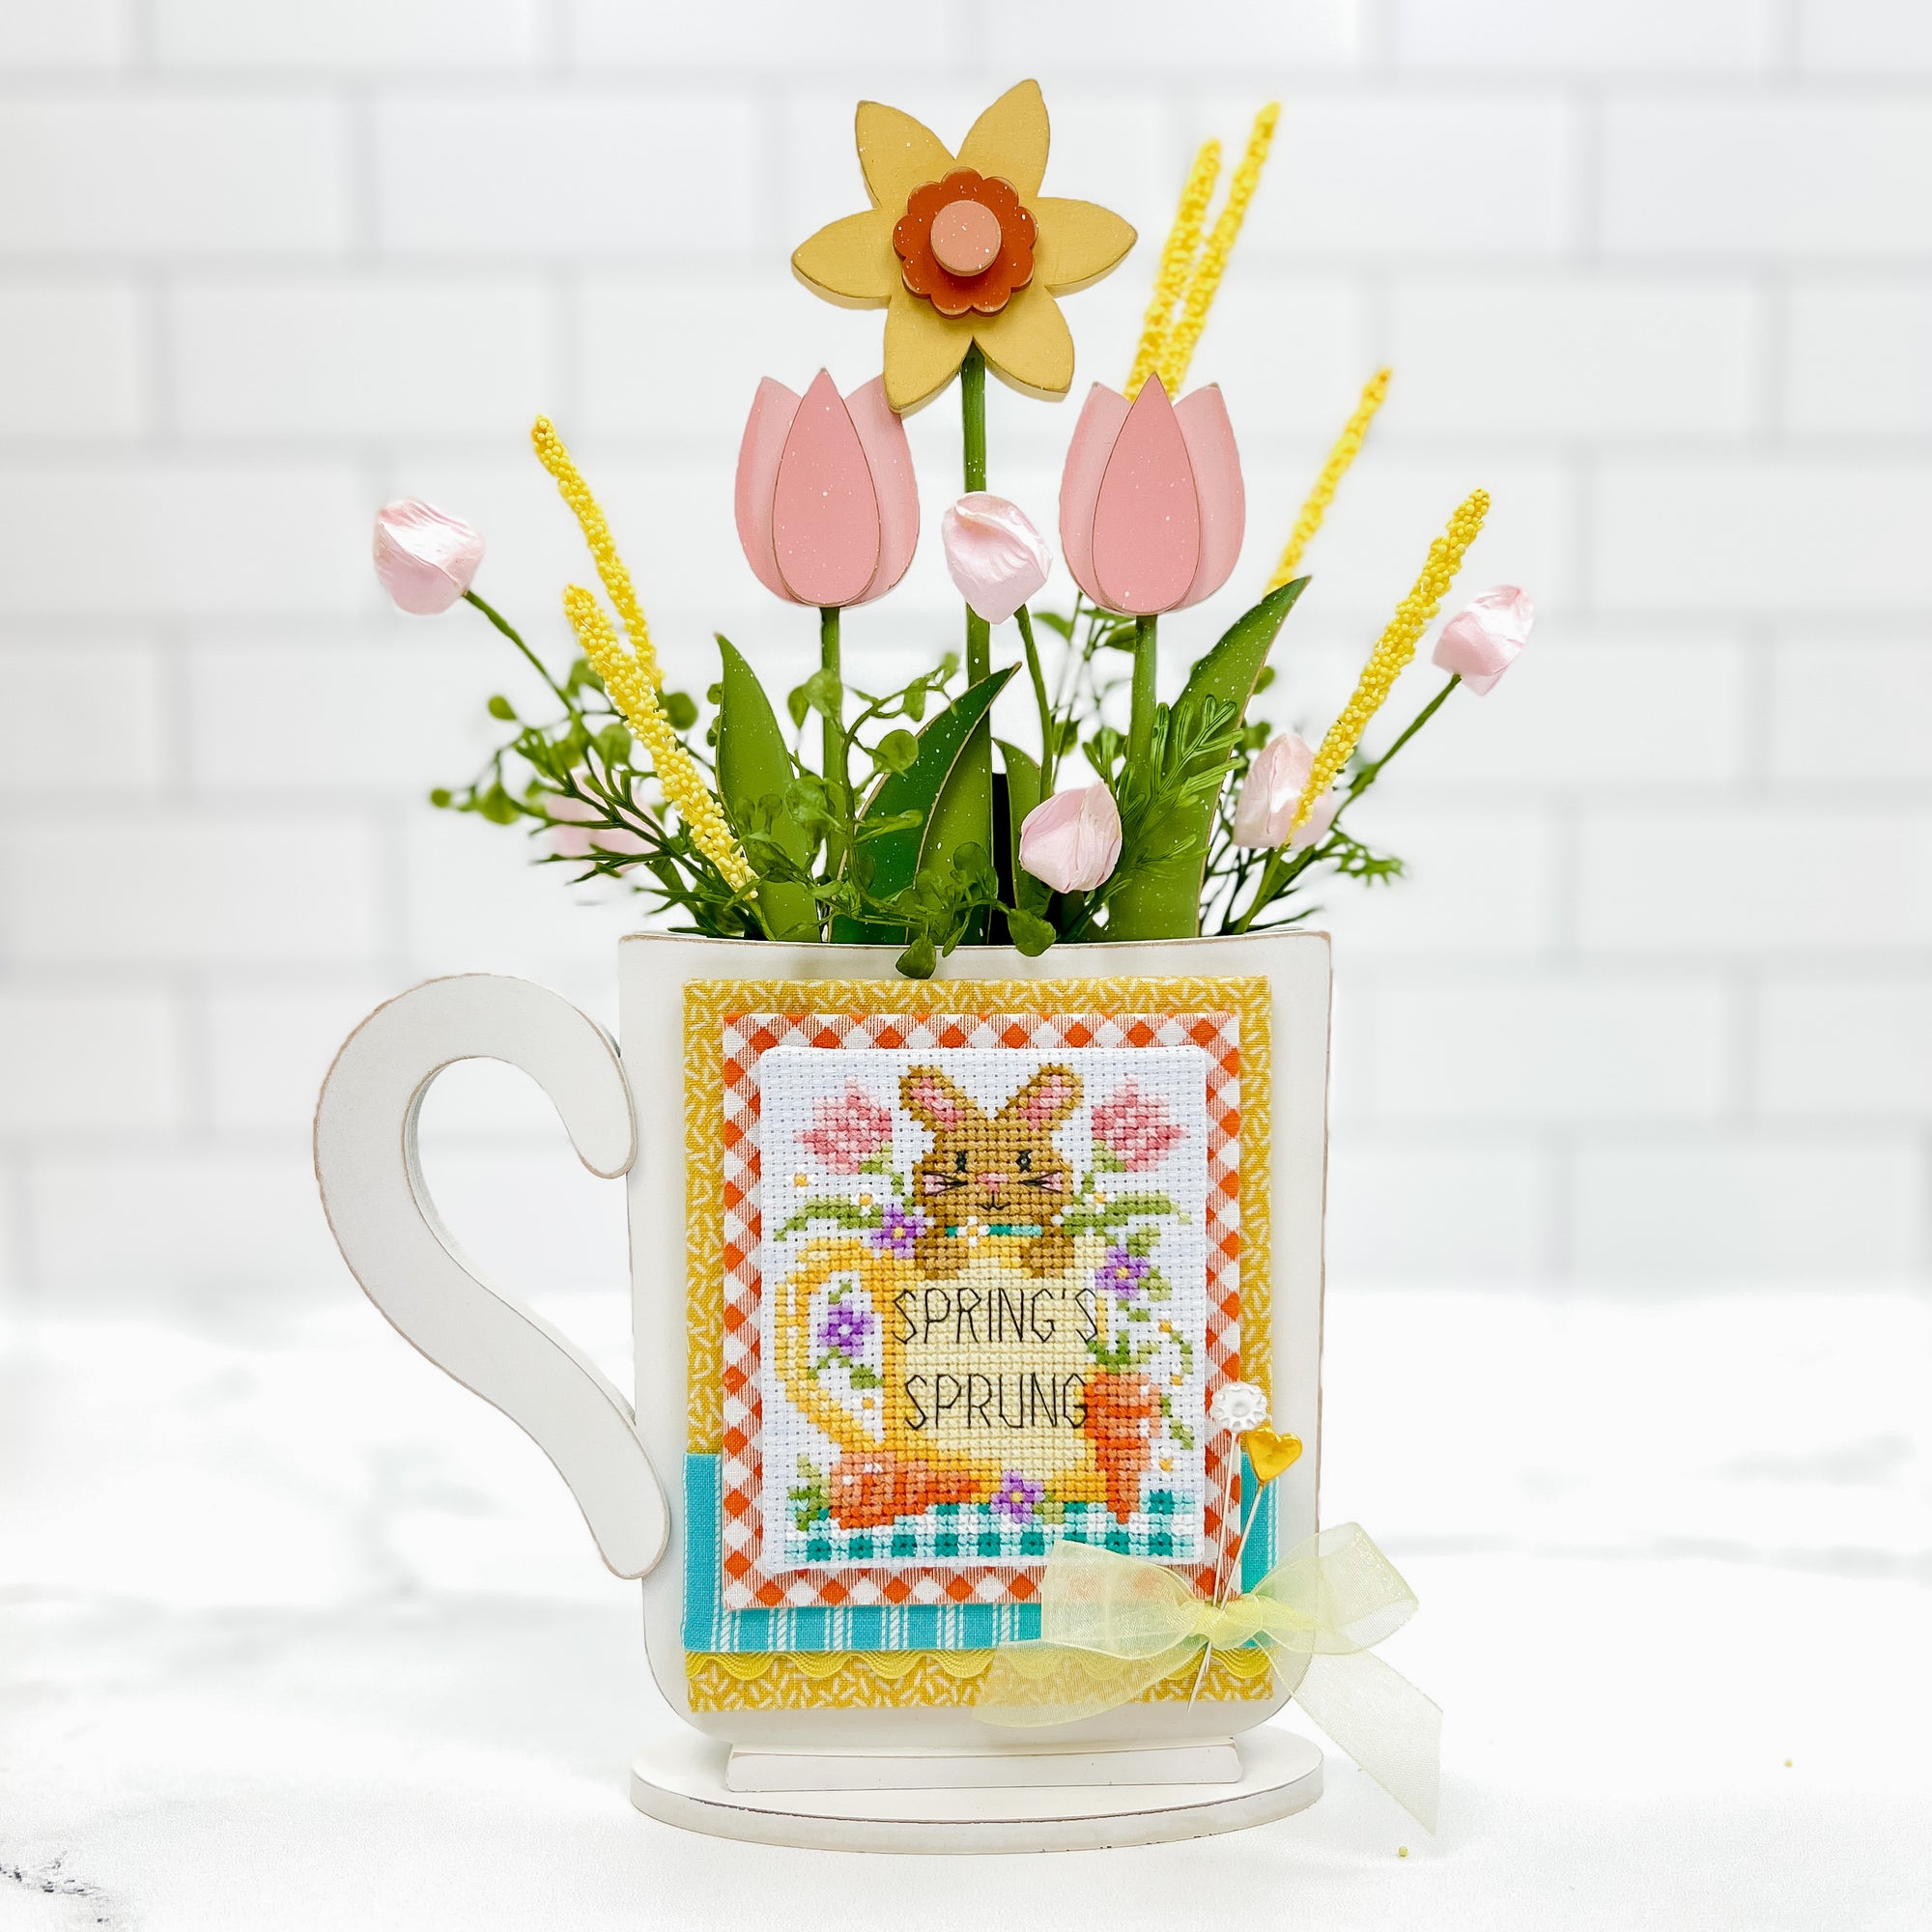 Mug cross stitch display with spring tulips and daffoldile inside the mug. Cross stitch pattern by Shannon Christine Designs